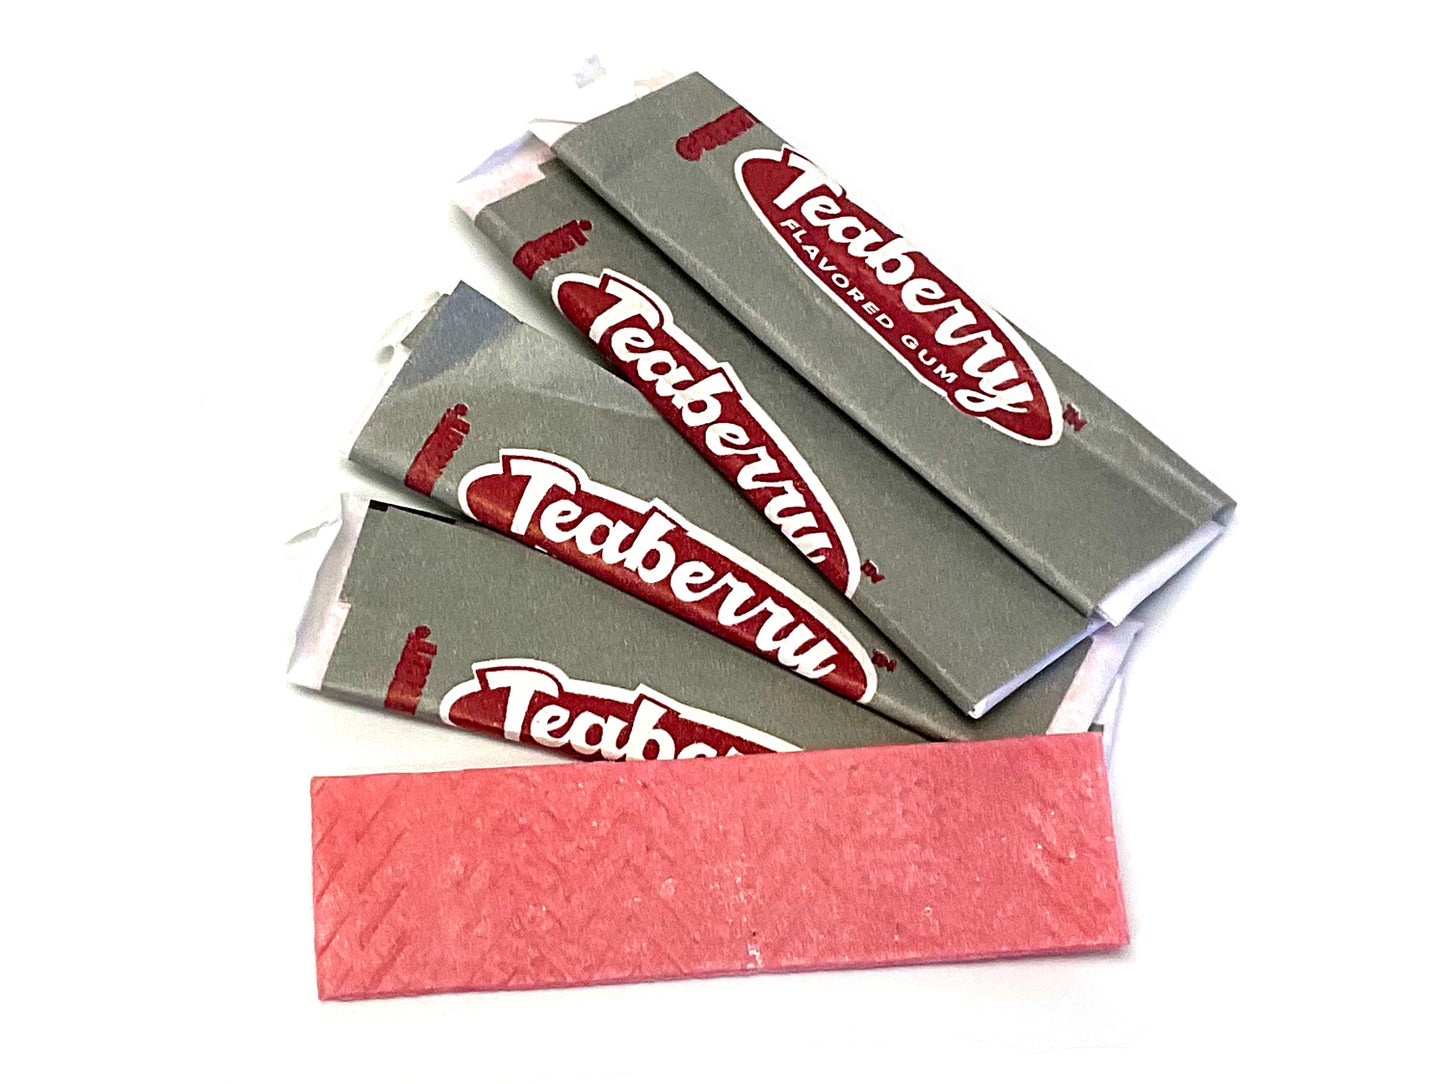 Teaberry Gum - open 5 sticks